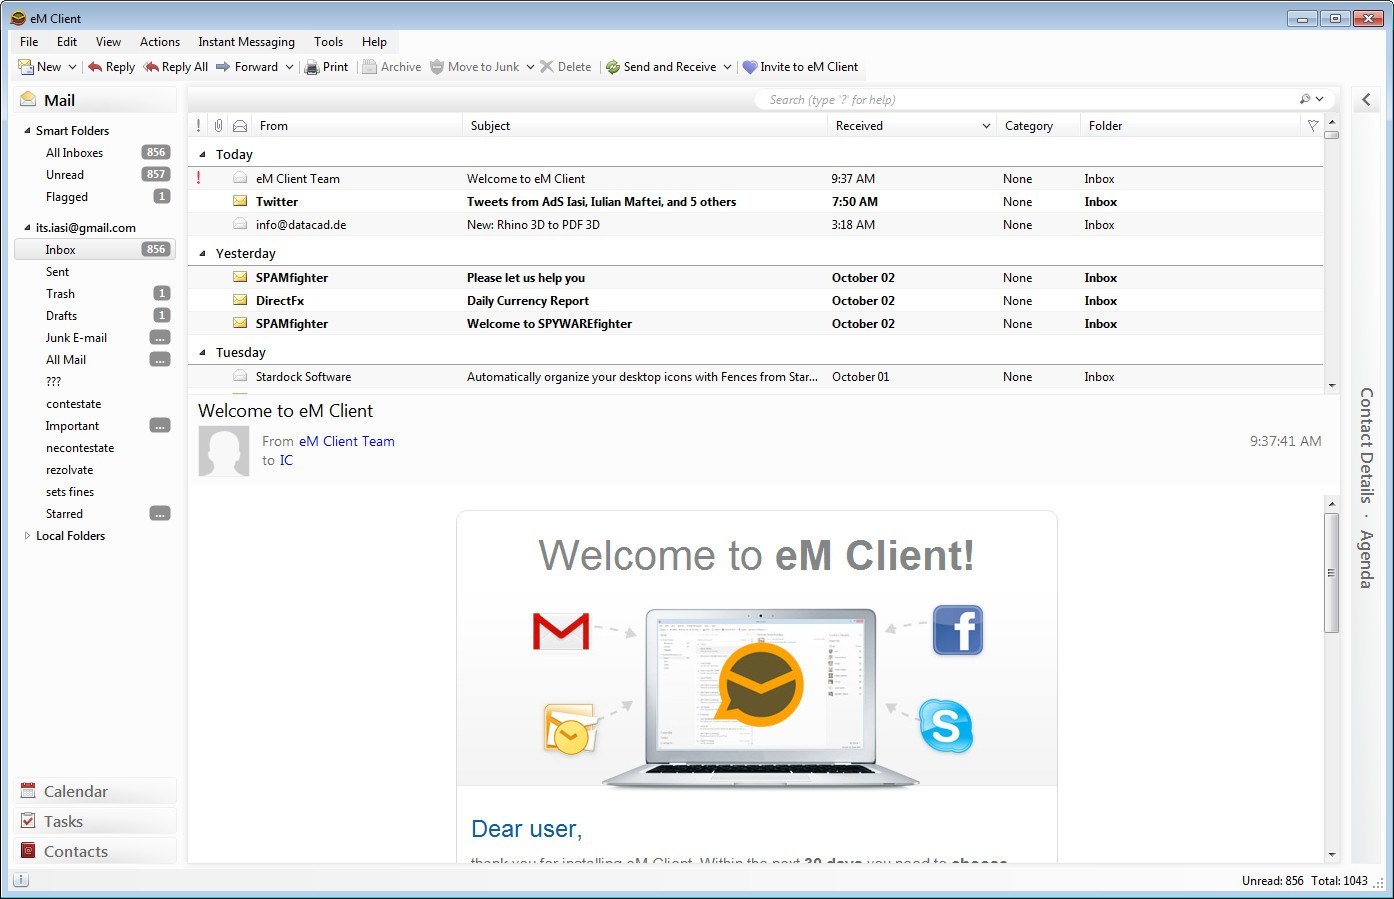 eM Client Pro 9.2.2038 for windows download free